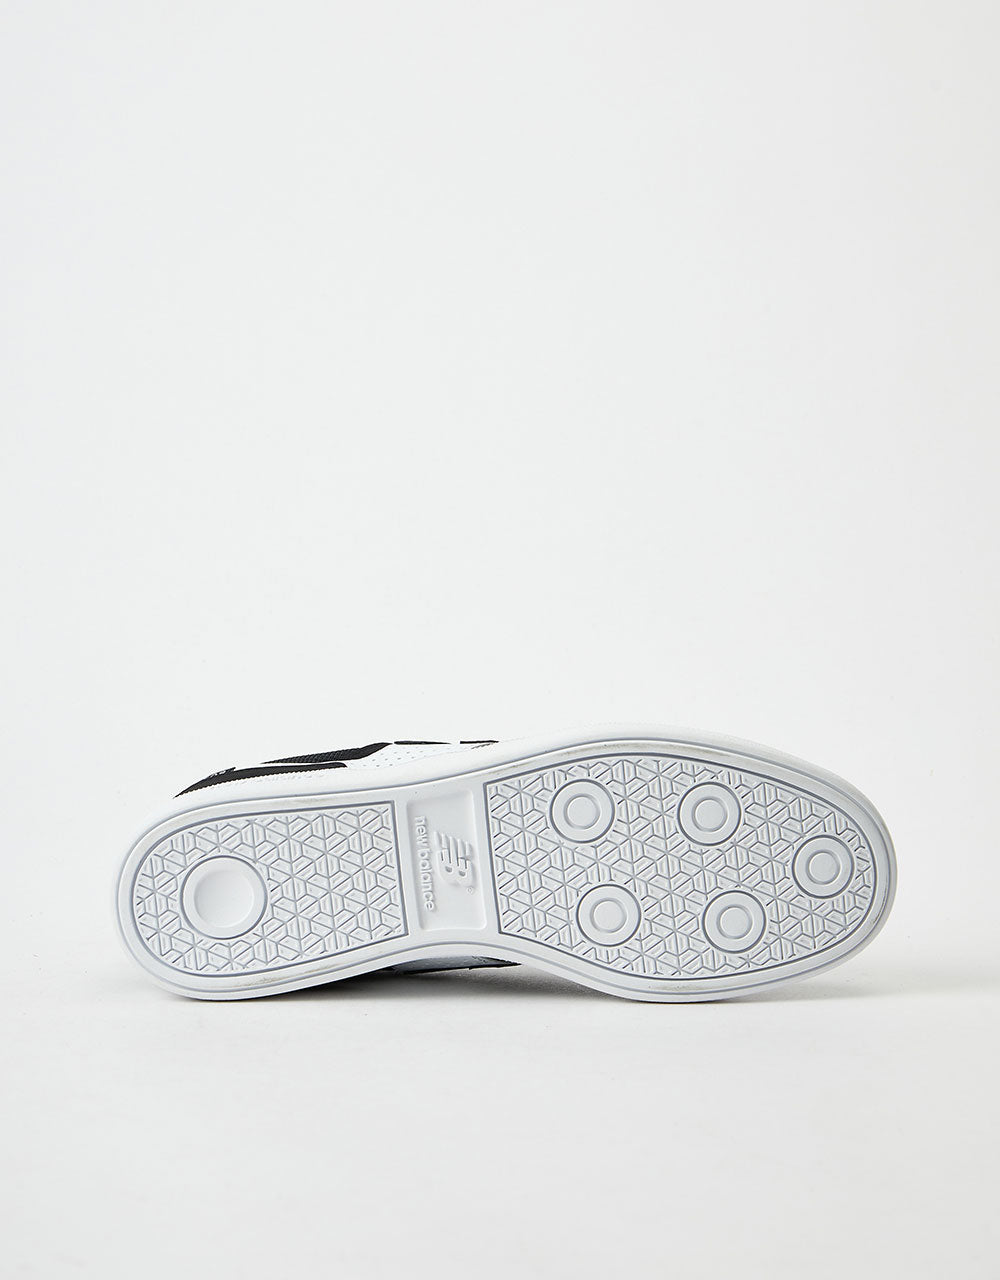 New Balance Numeric 508 Skate Shoes - Black/White